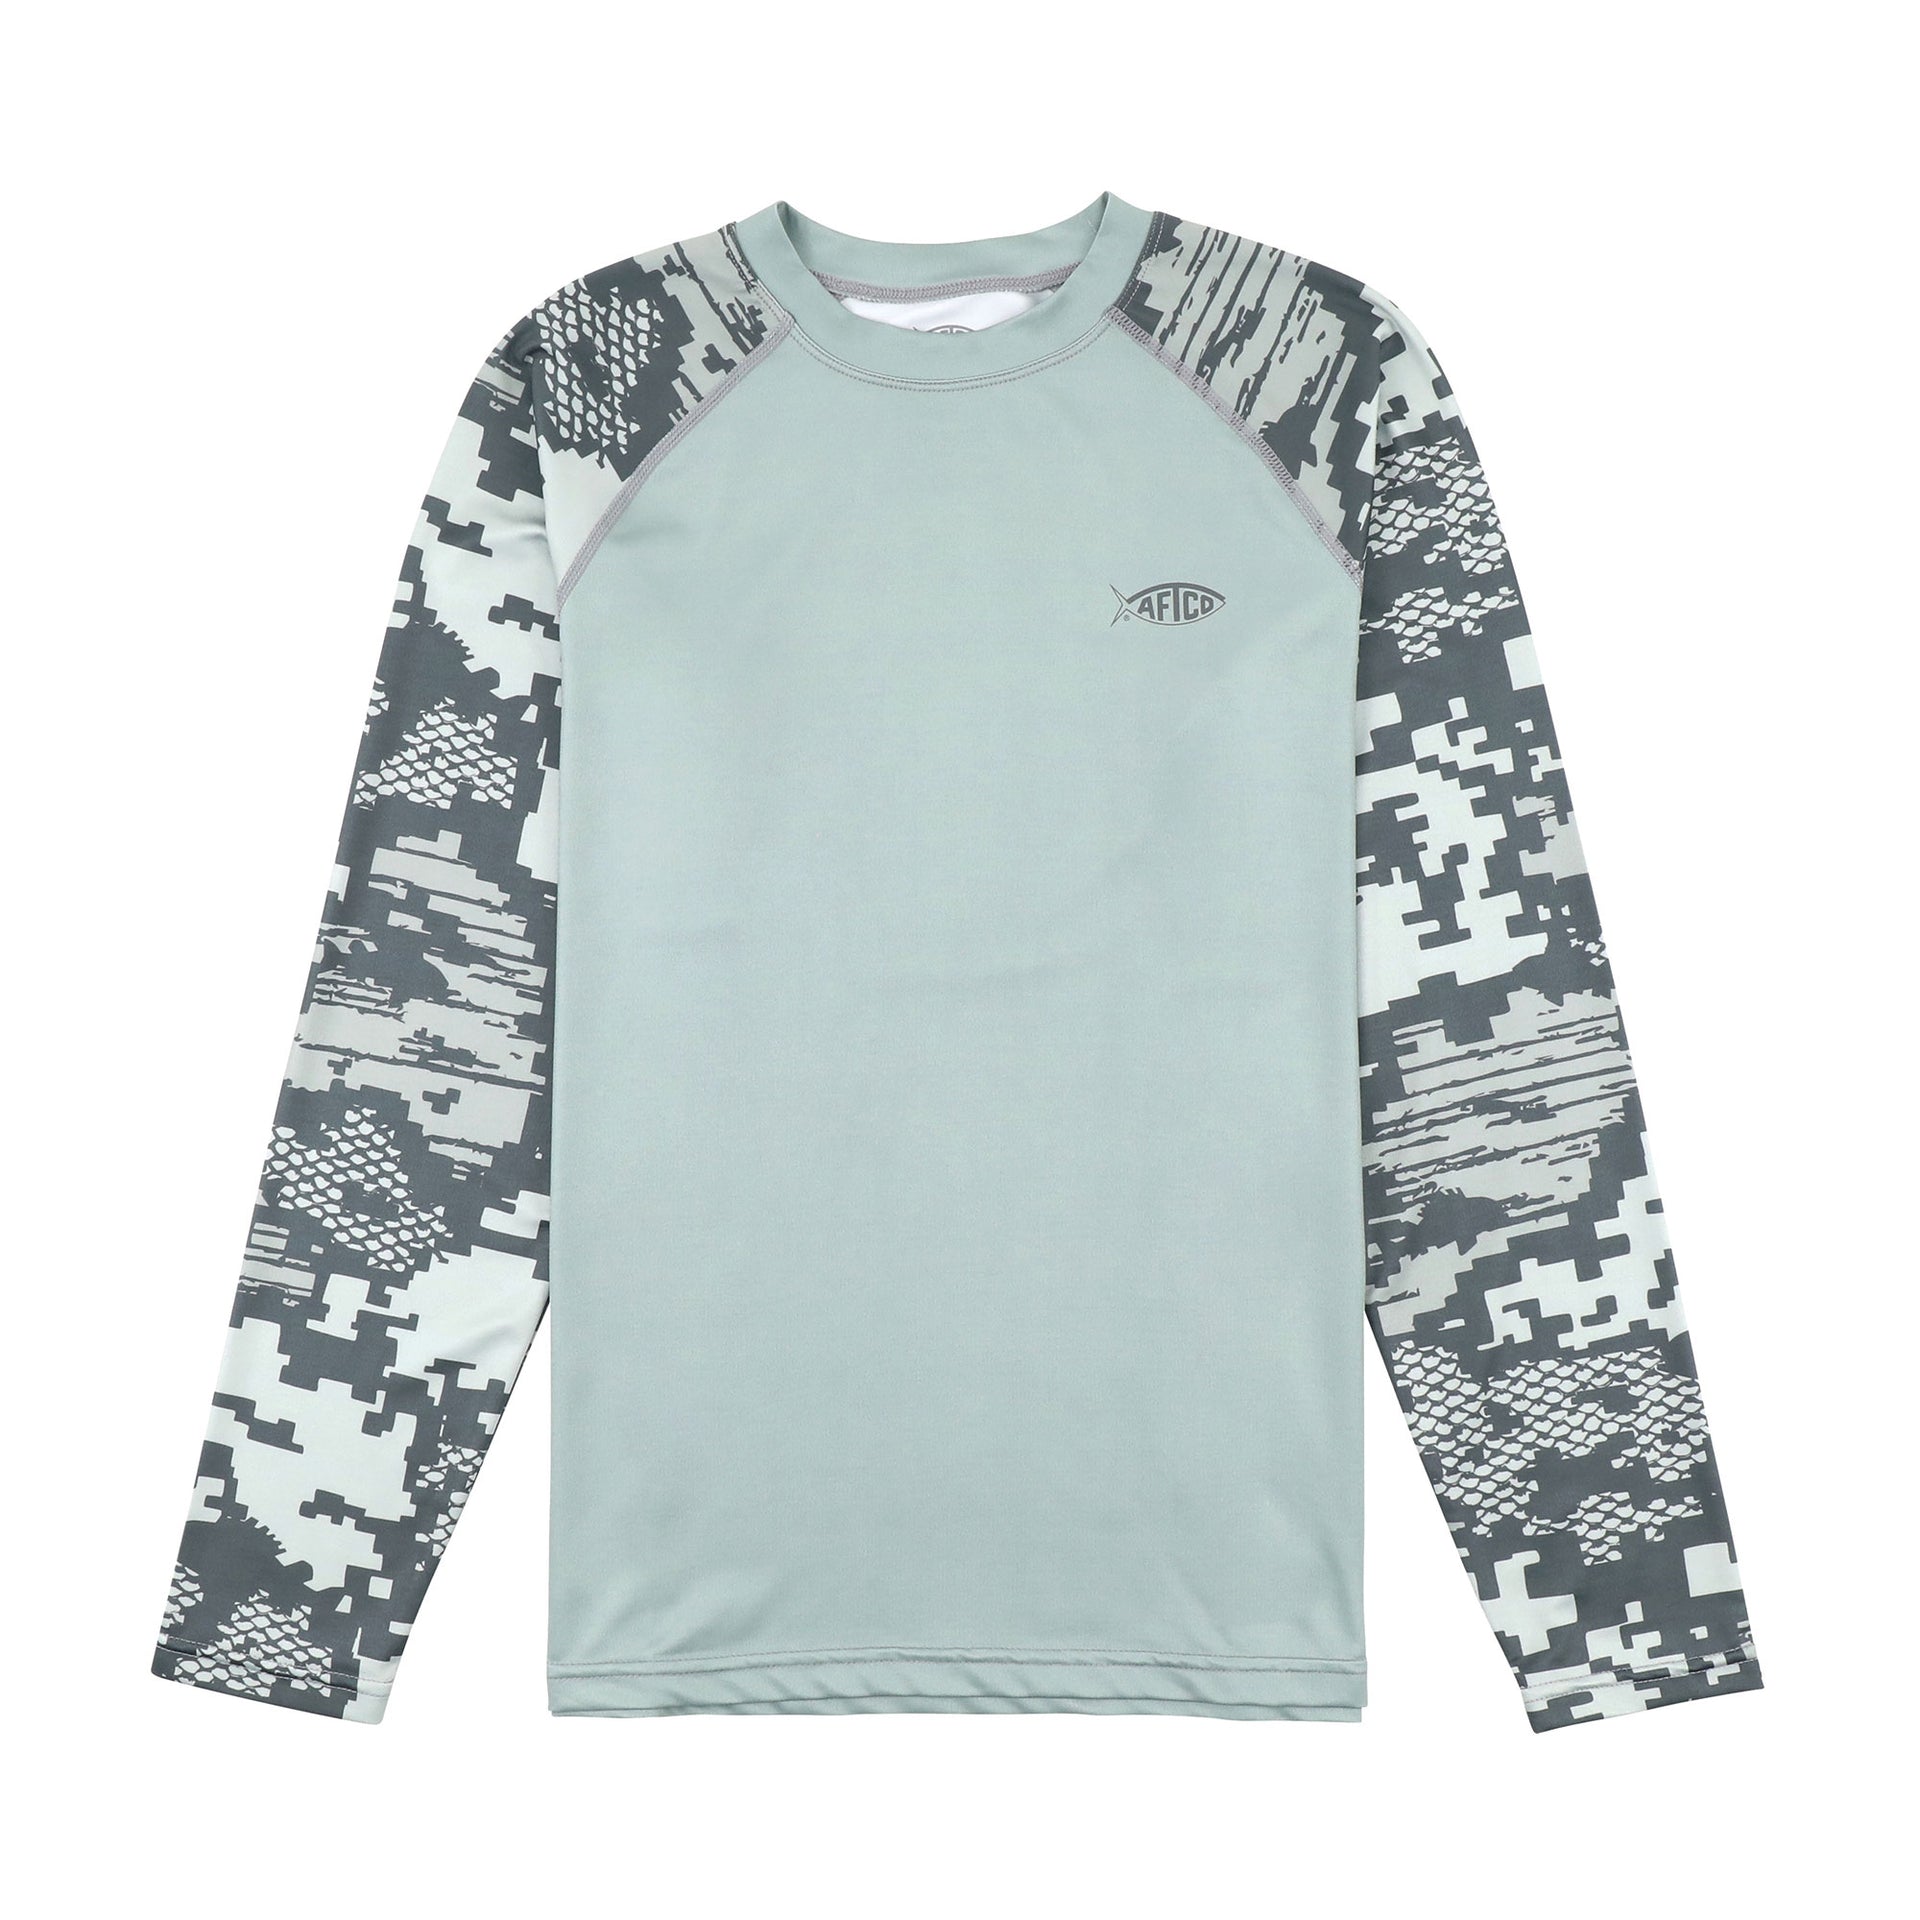 NWT! MTA Sport Active Short-sleeve Fast Dri Tee Shirt Boys Sz XS 5 Gray Camo